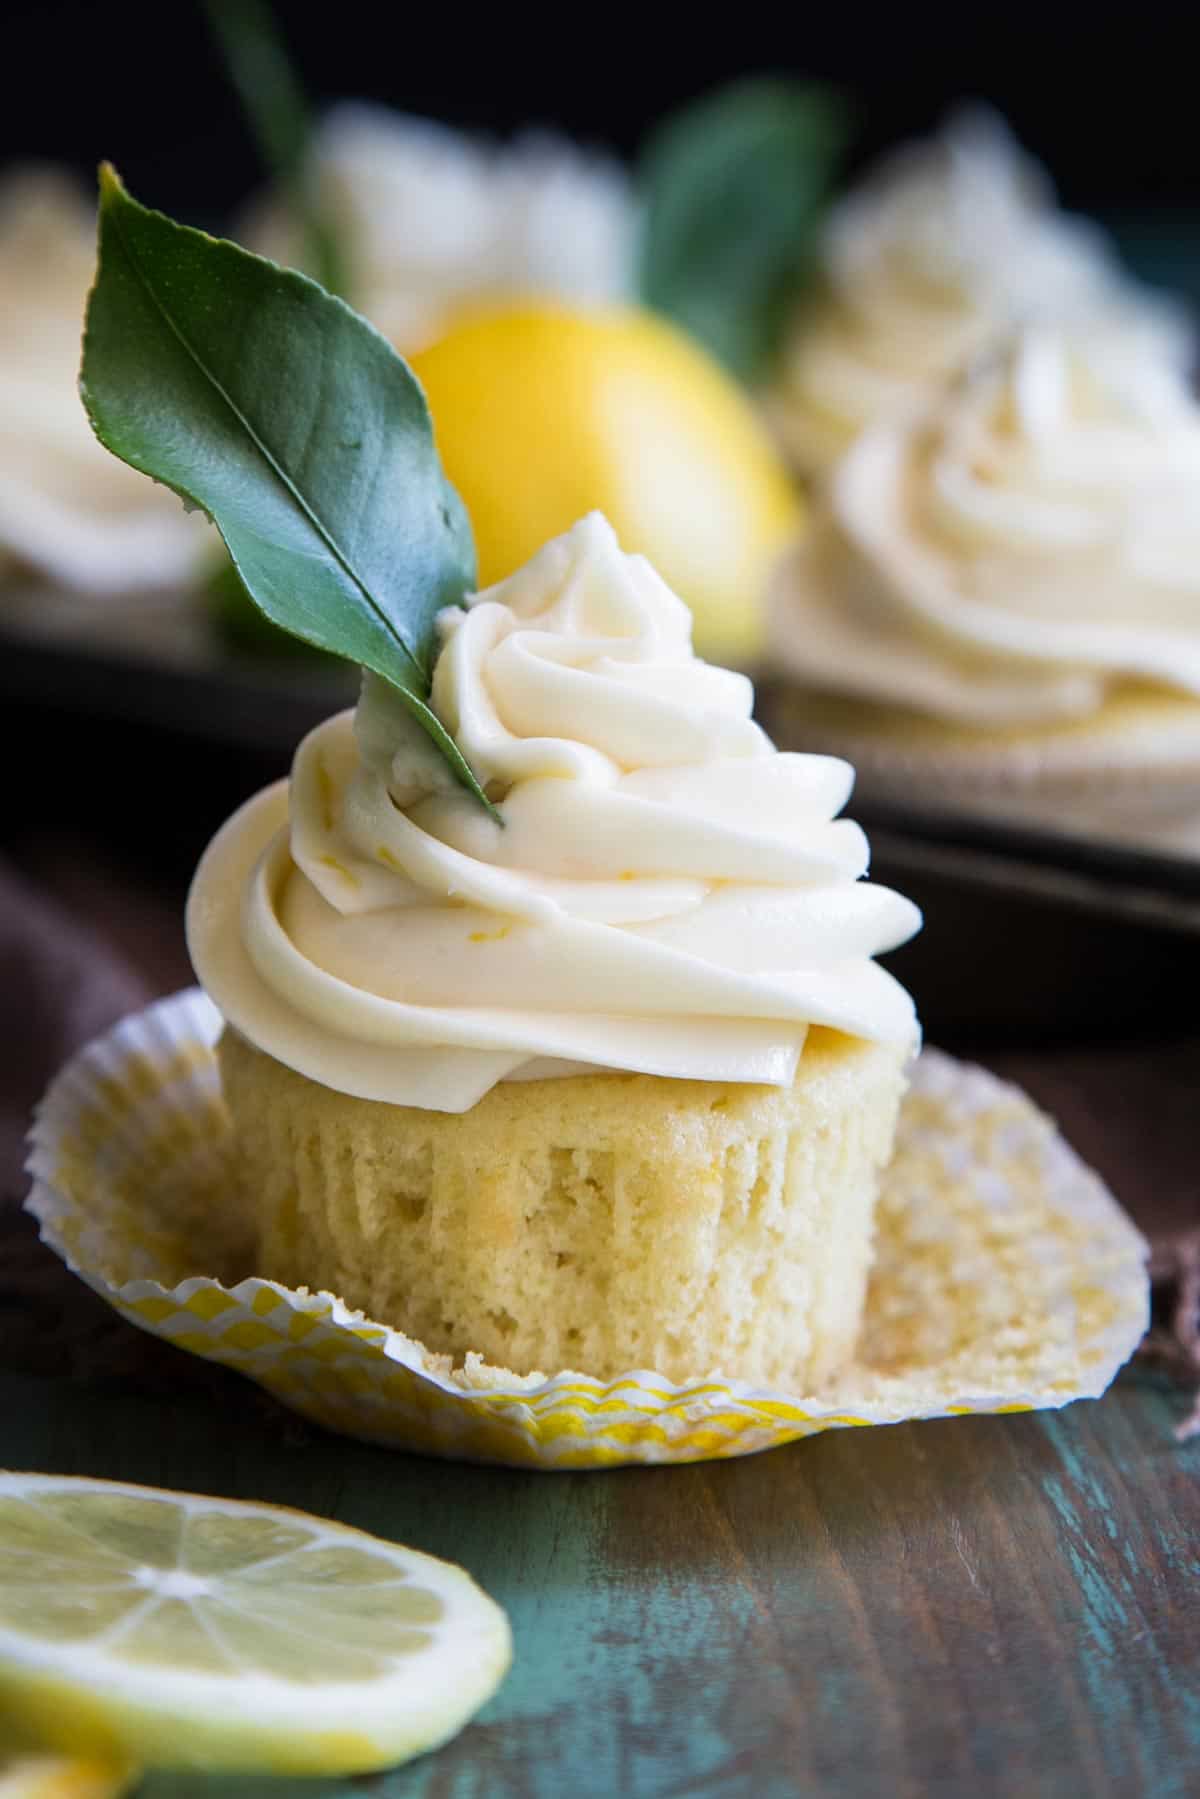 Lemon cream cheese frosting on a lemon cupcake.